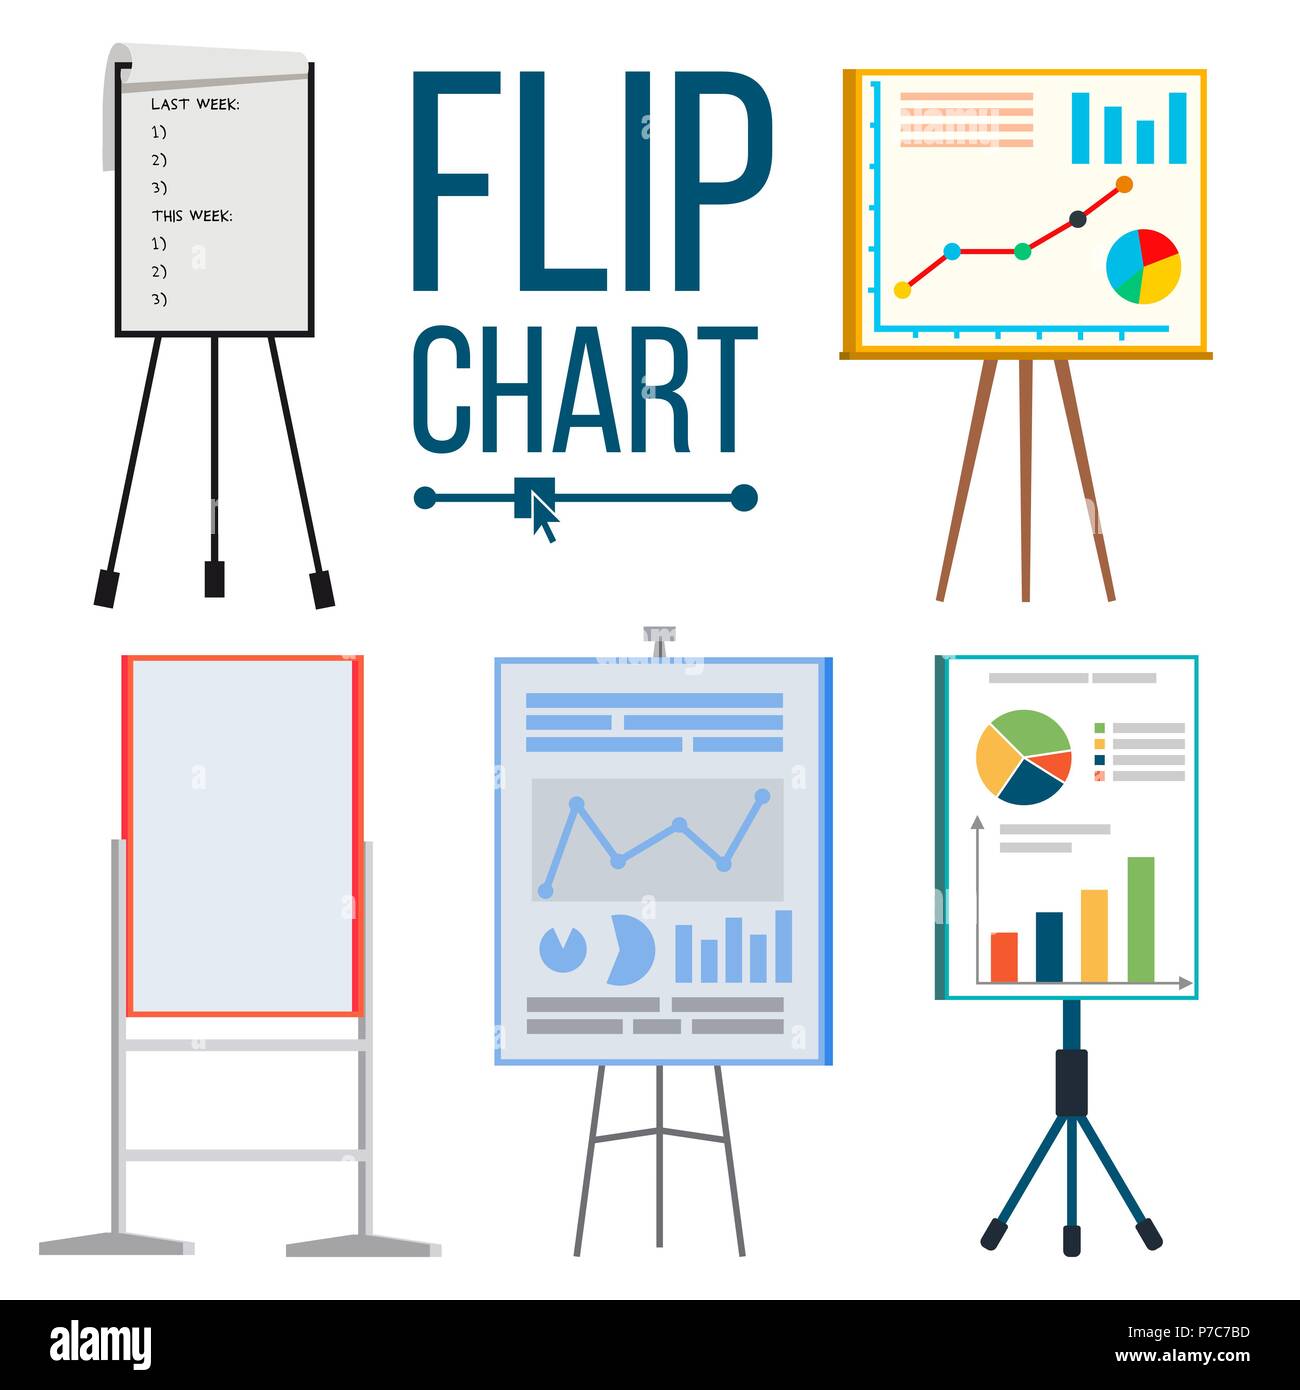 Flip Charts